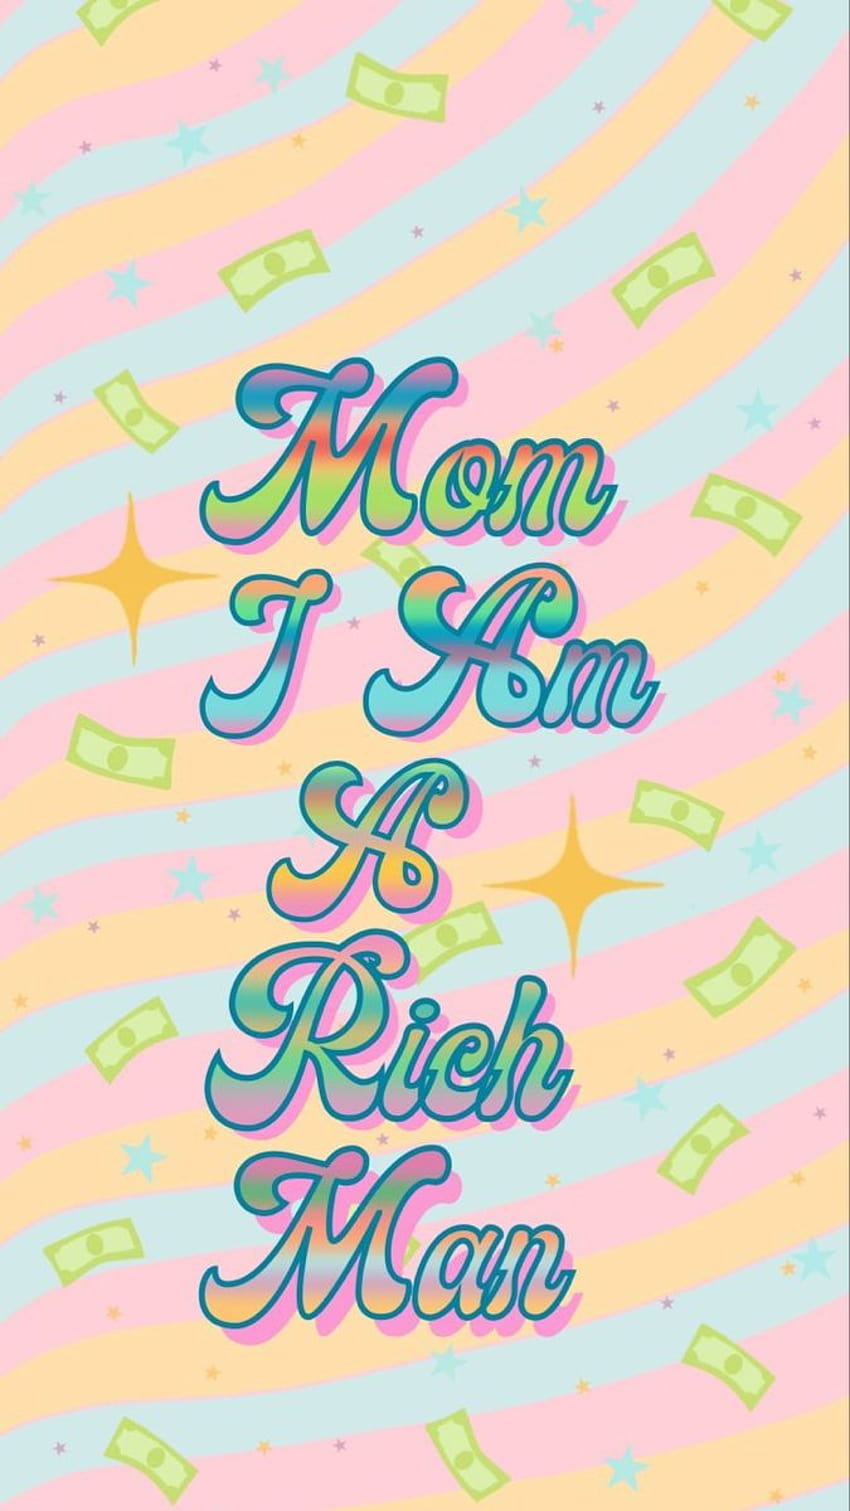 Mom I am a rich man, rich guy HD phone wallpaper